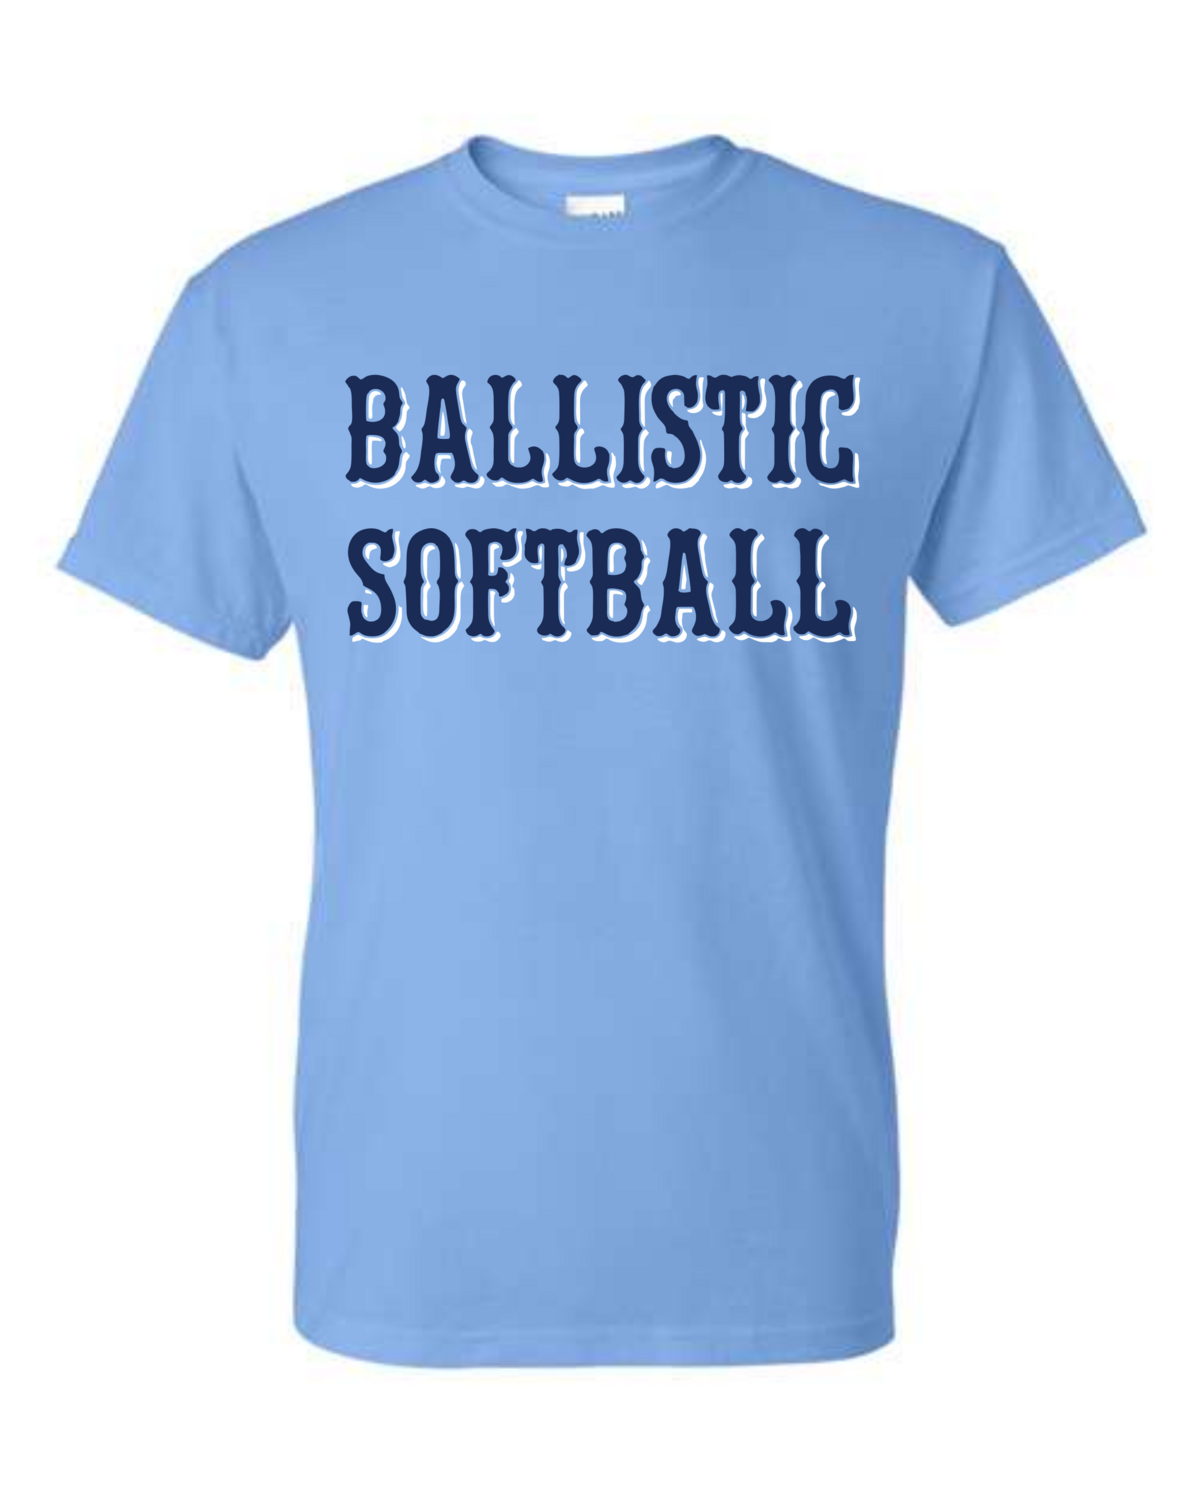 Ballistic Softball Columbia Blue Cotton Short Sleeve